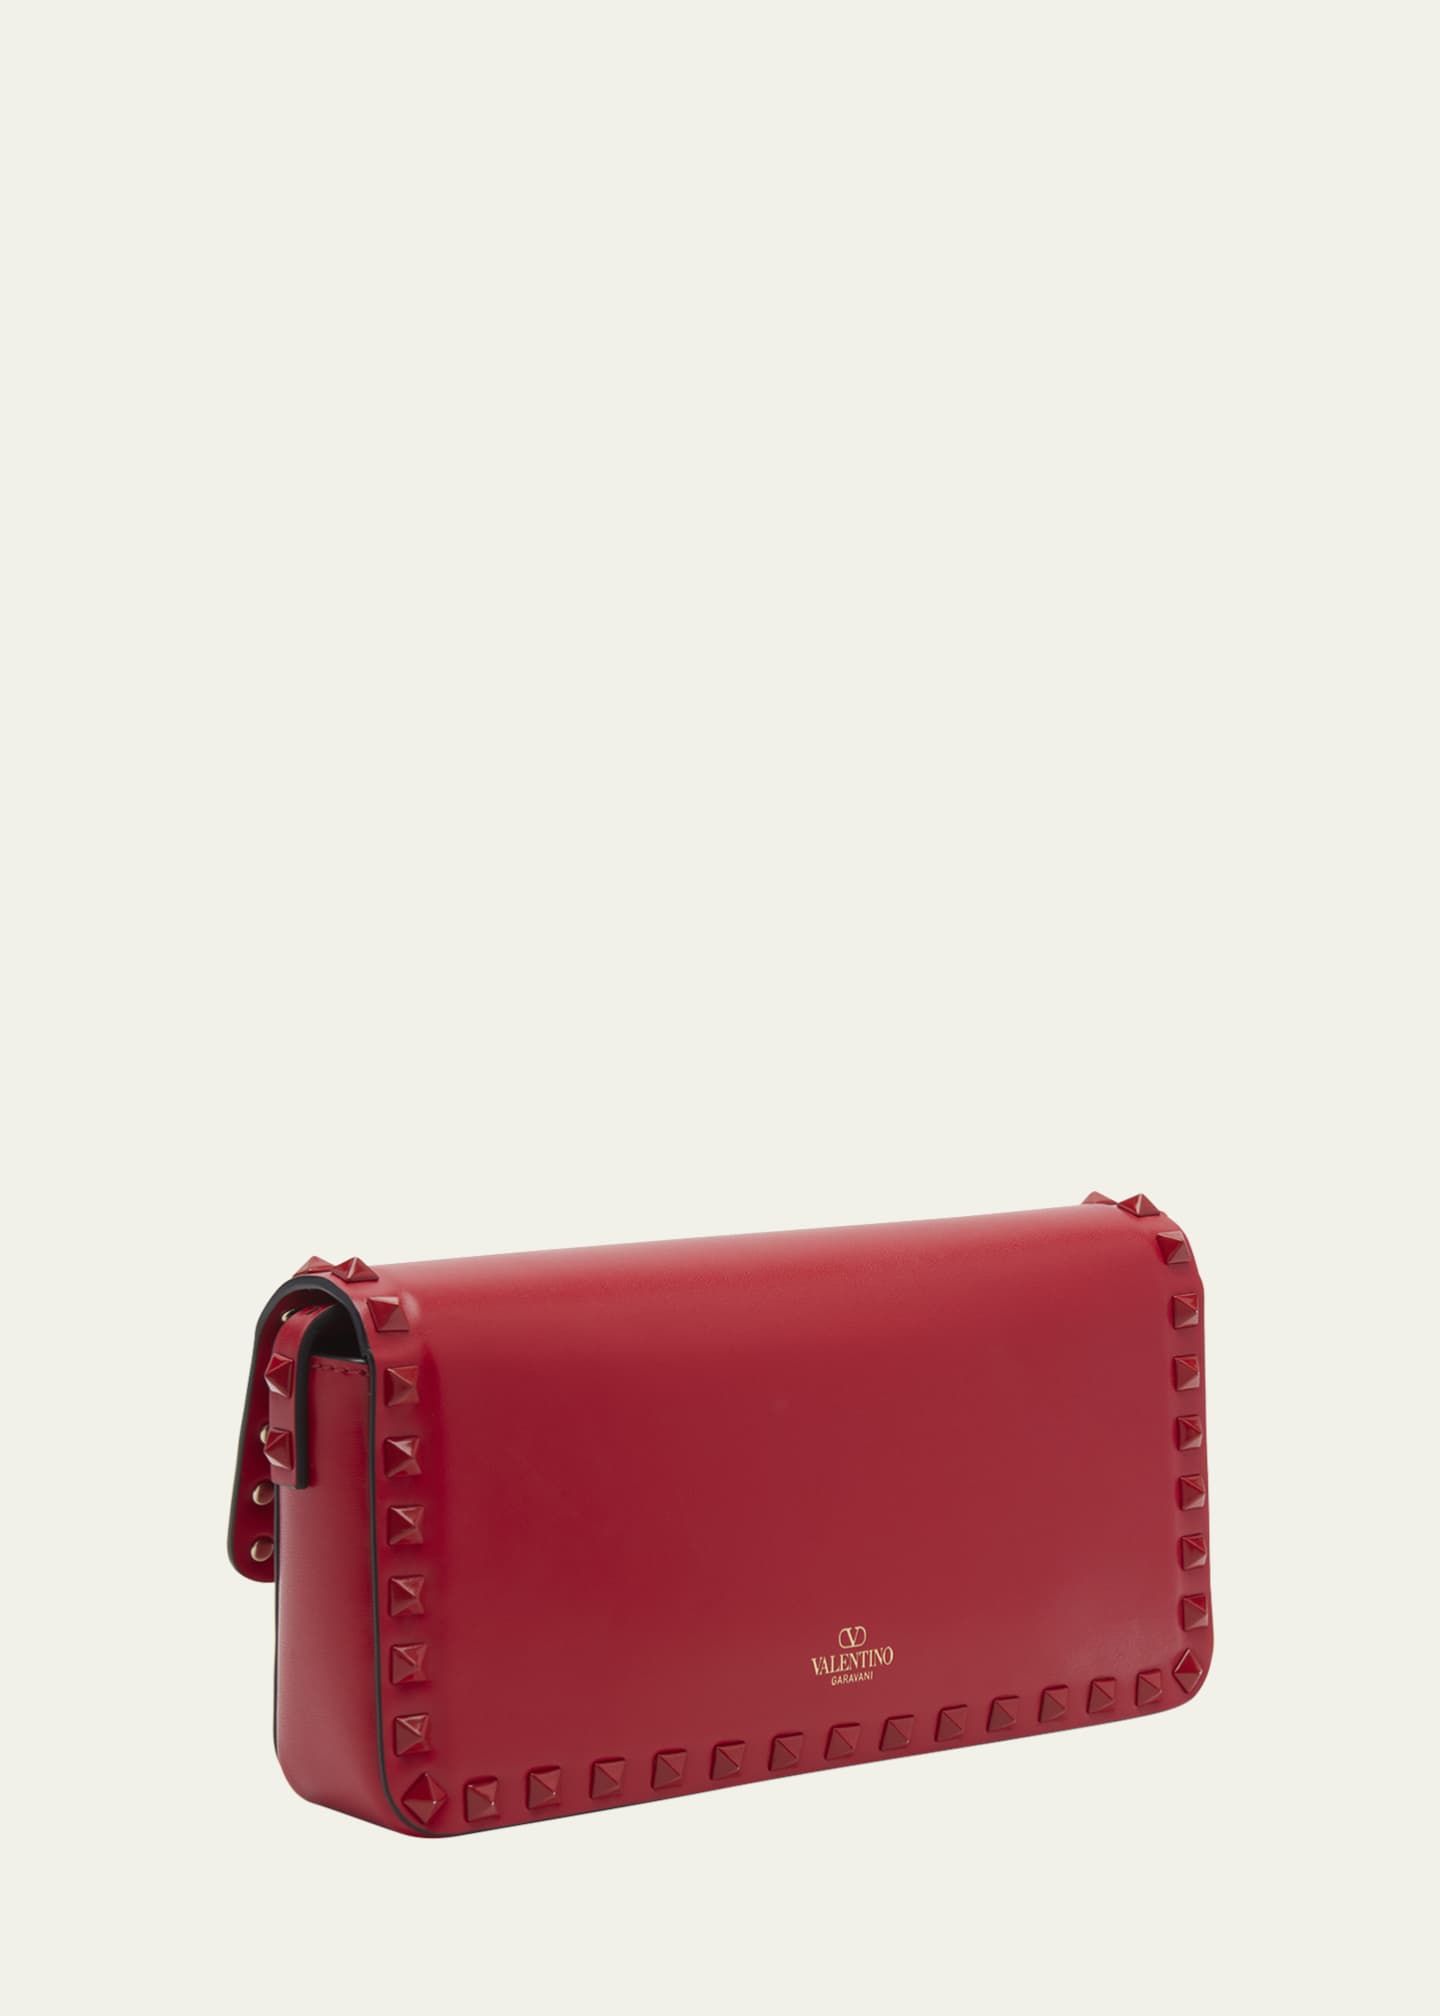 Red Valentino Garavani Rockstud Handbag - clothing & accessories